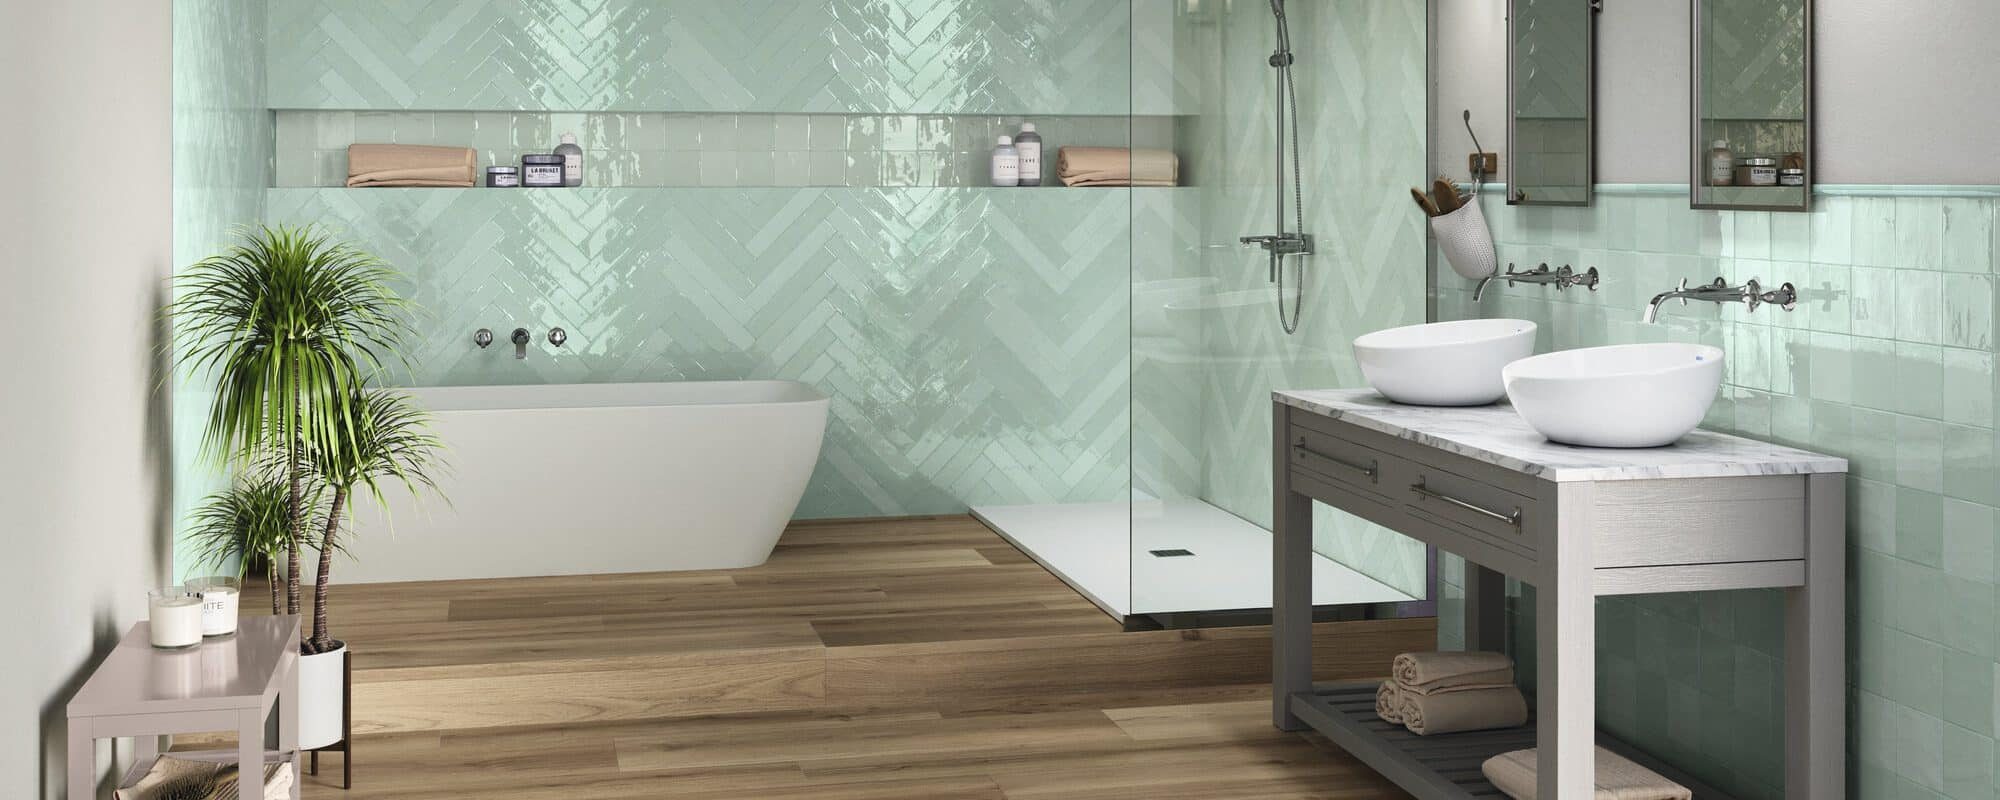 KOEN wood effect porcelain bathroom tiles uk slider 8